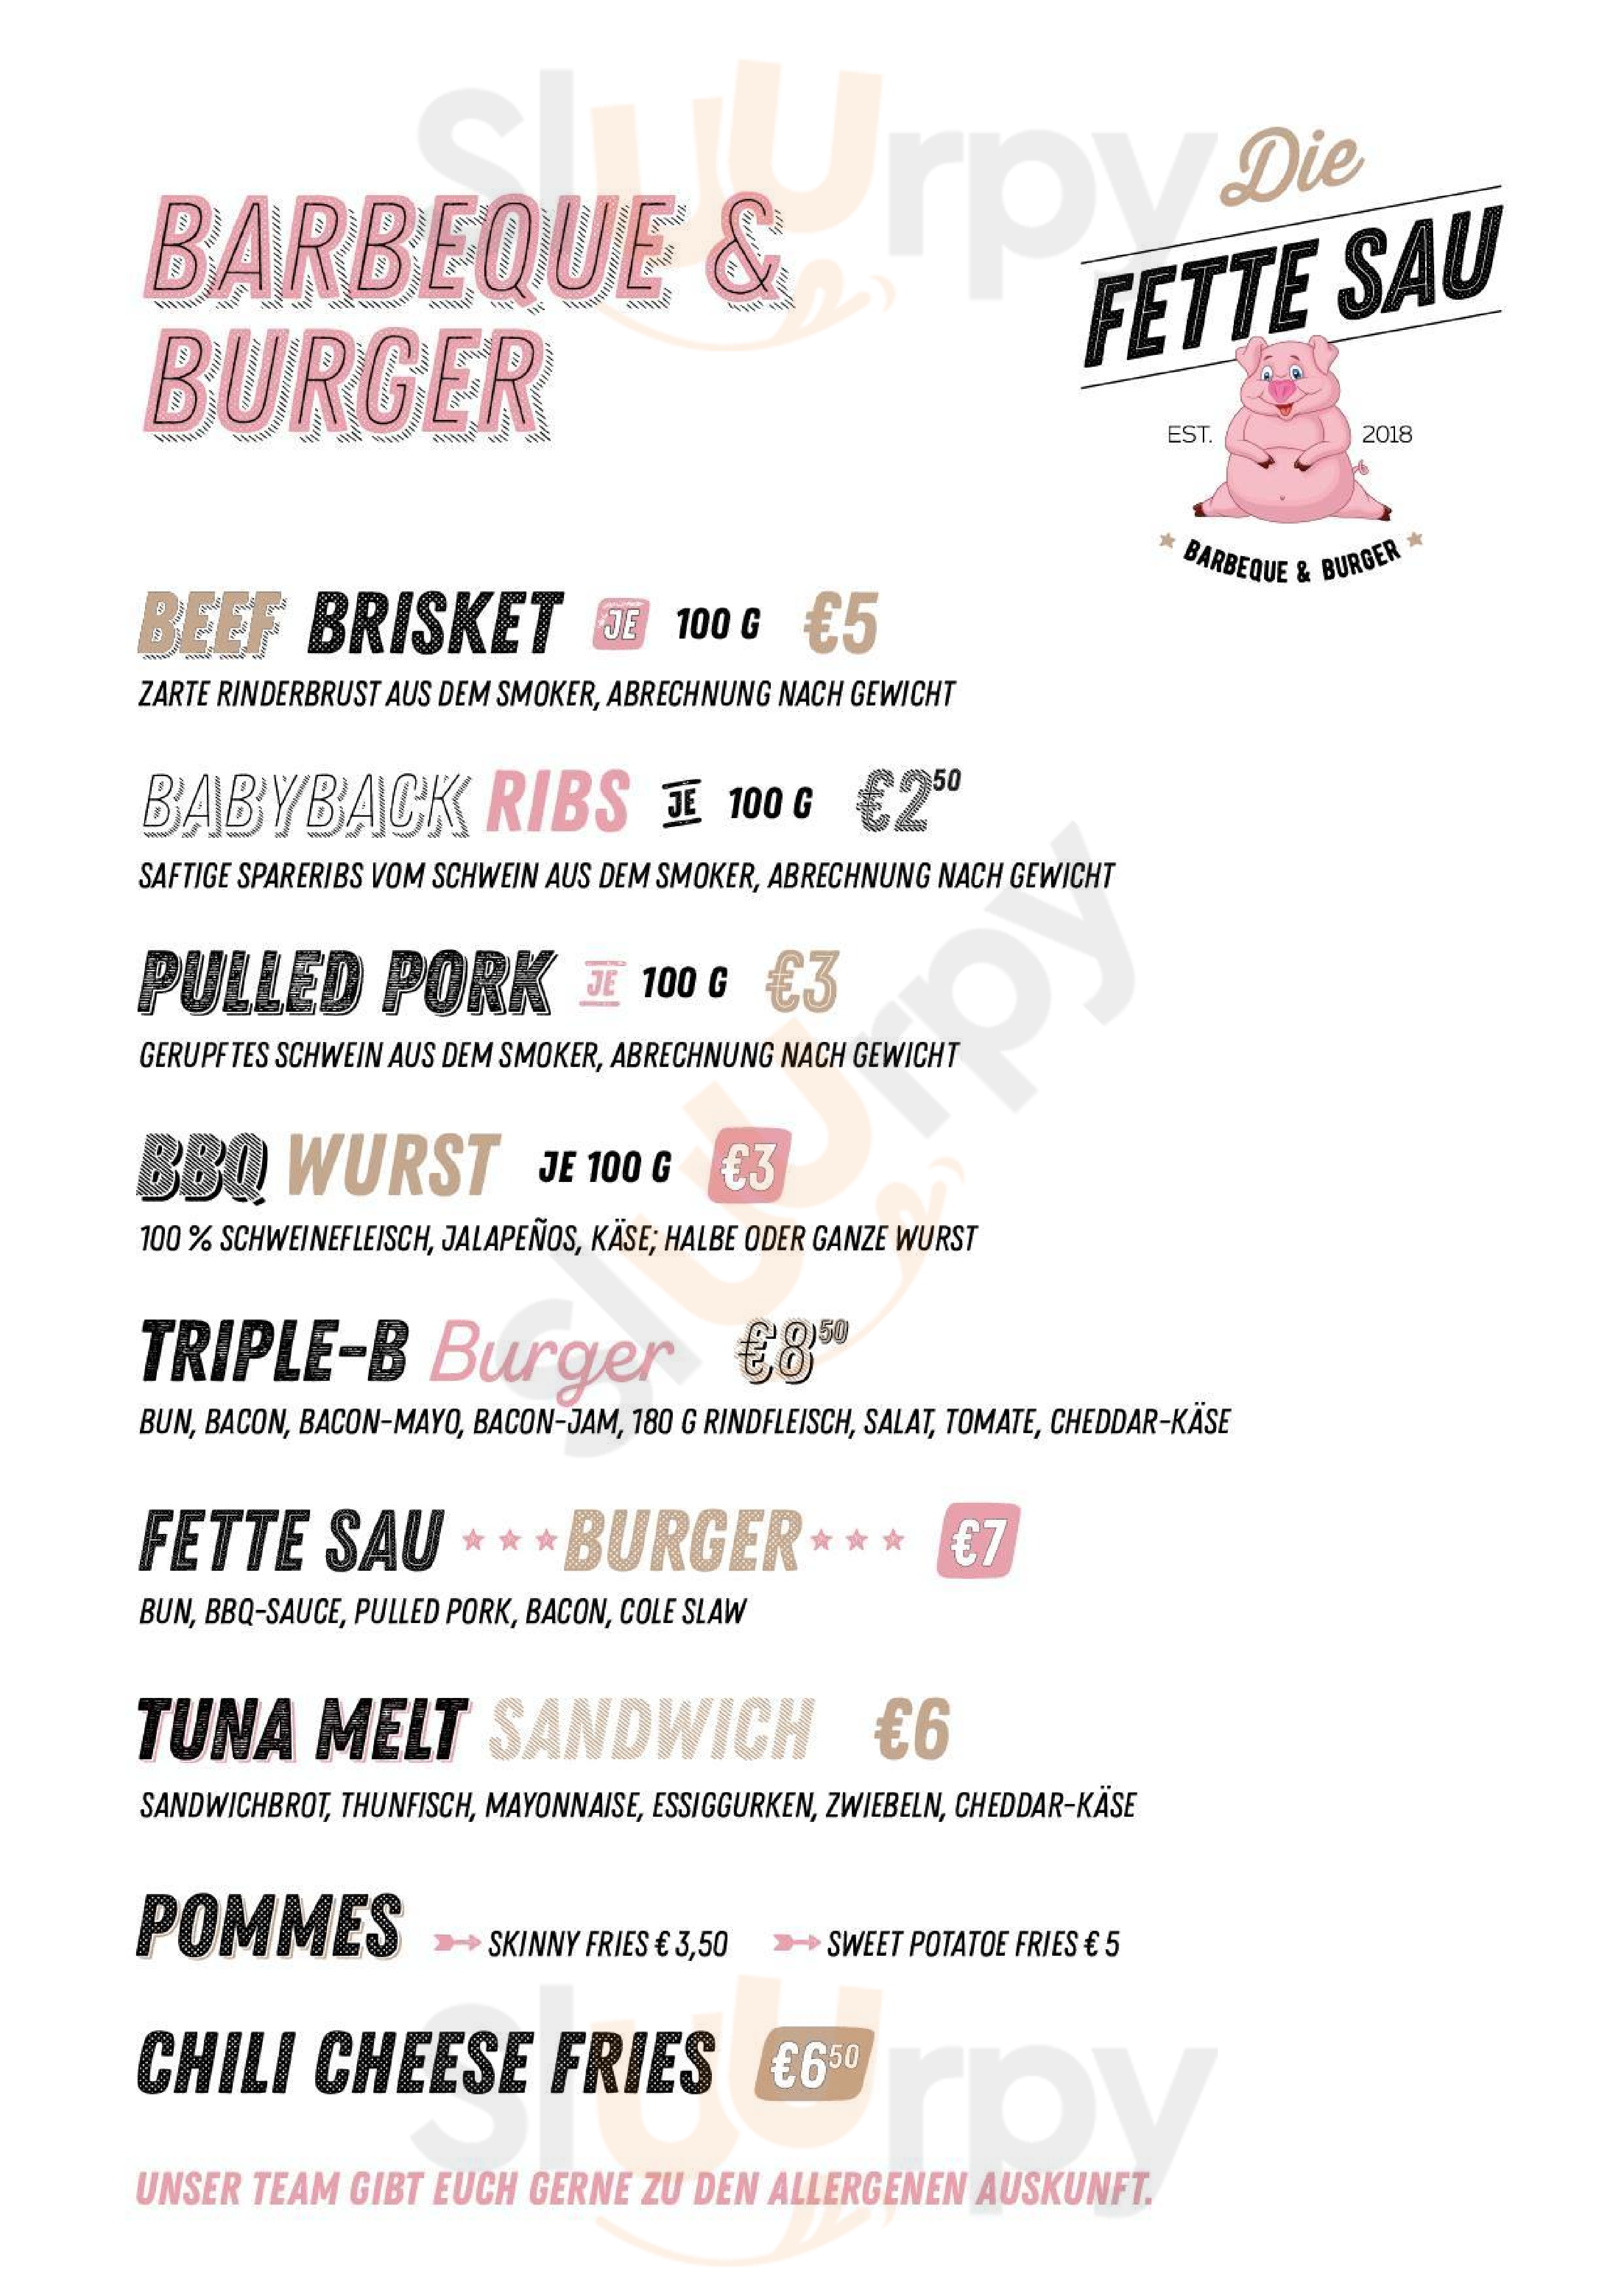 Die Fette Sau Barbeque & Burger Ergolding Menu - 1